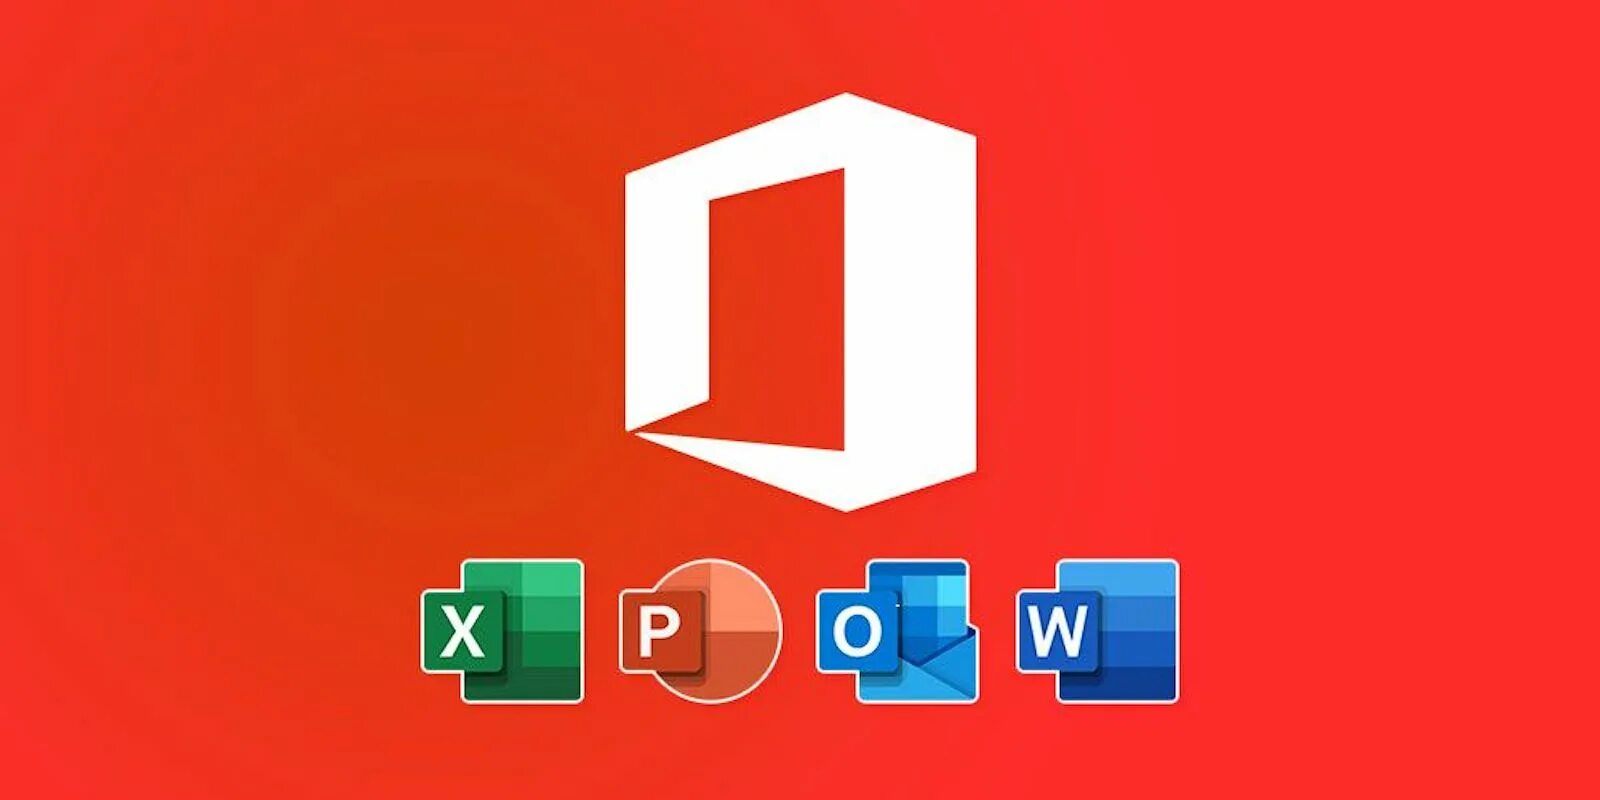 Microsoft Office 2021. Майкрософт офис последняя версия 2021. Microsoft Office 2021 for Mac. Логотип MS Office 2021.